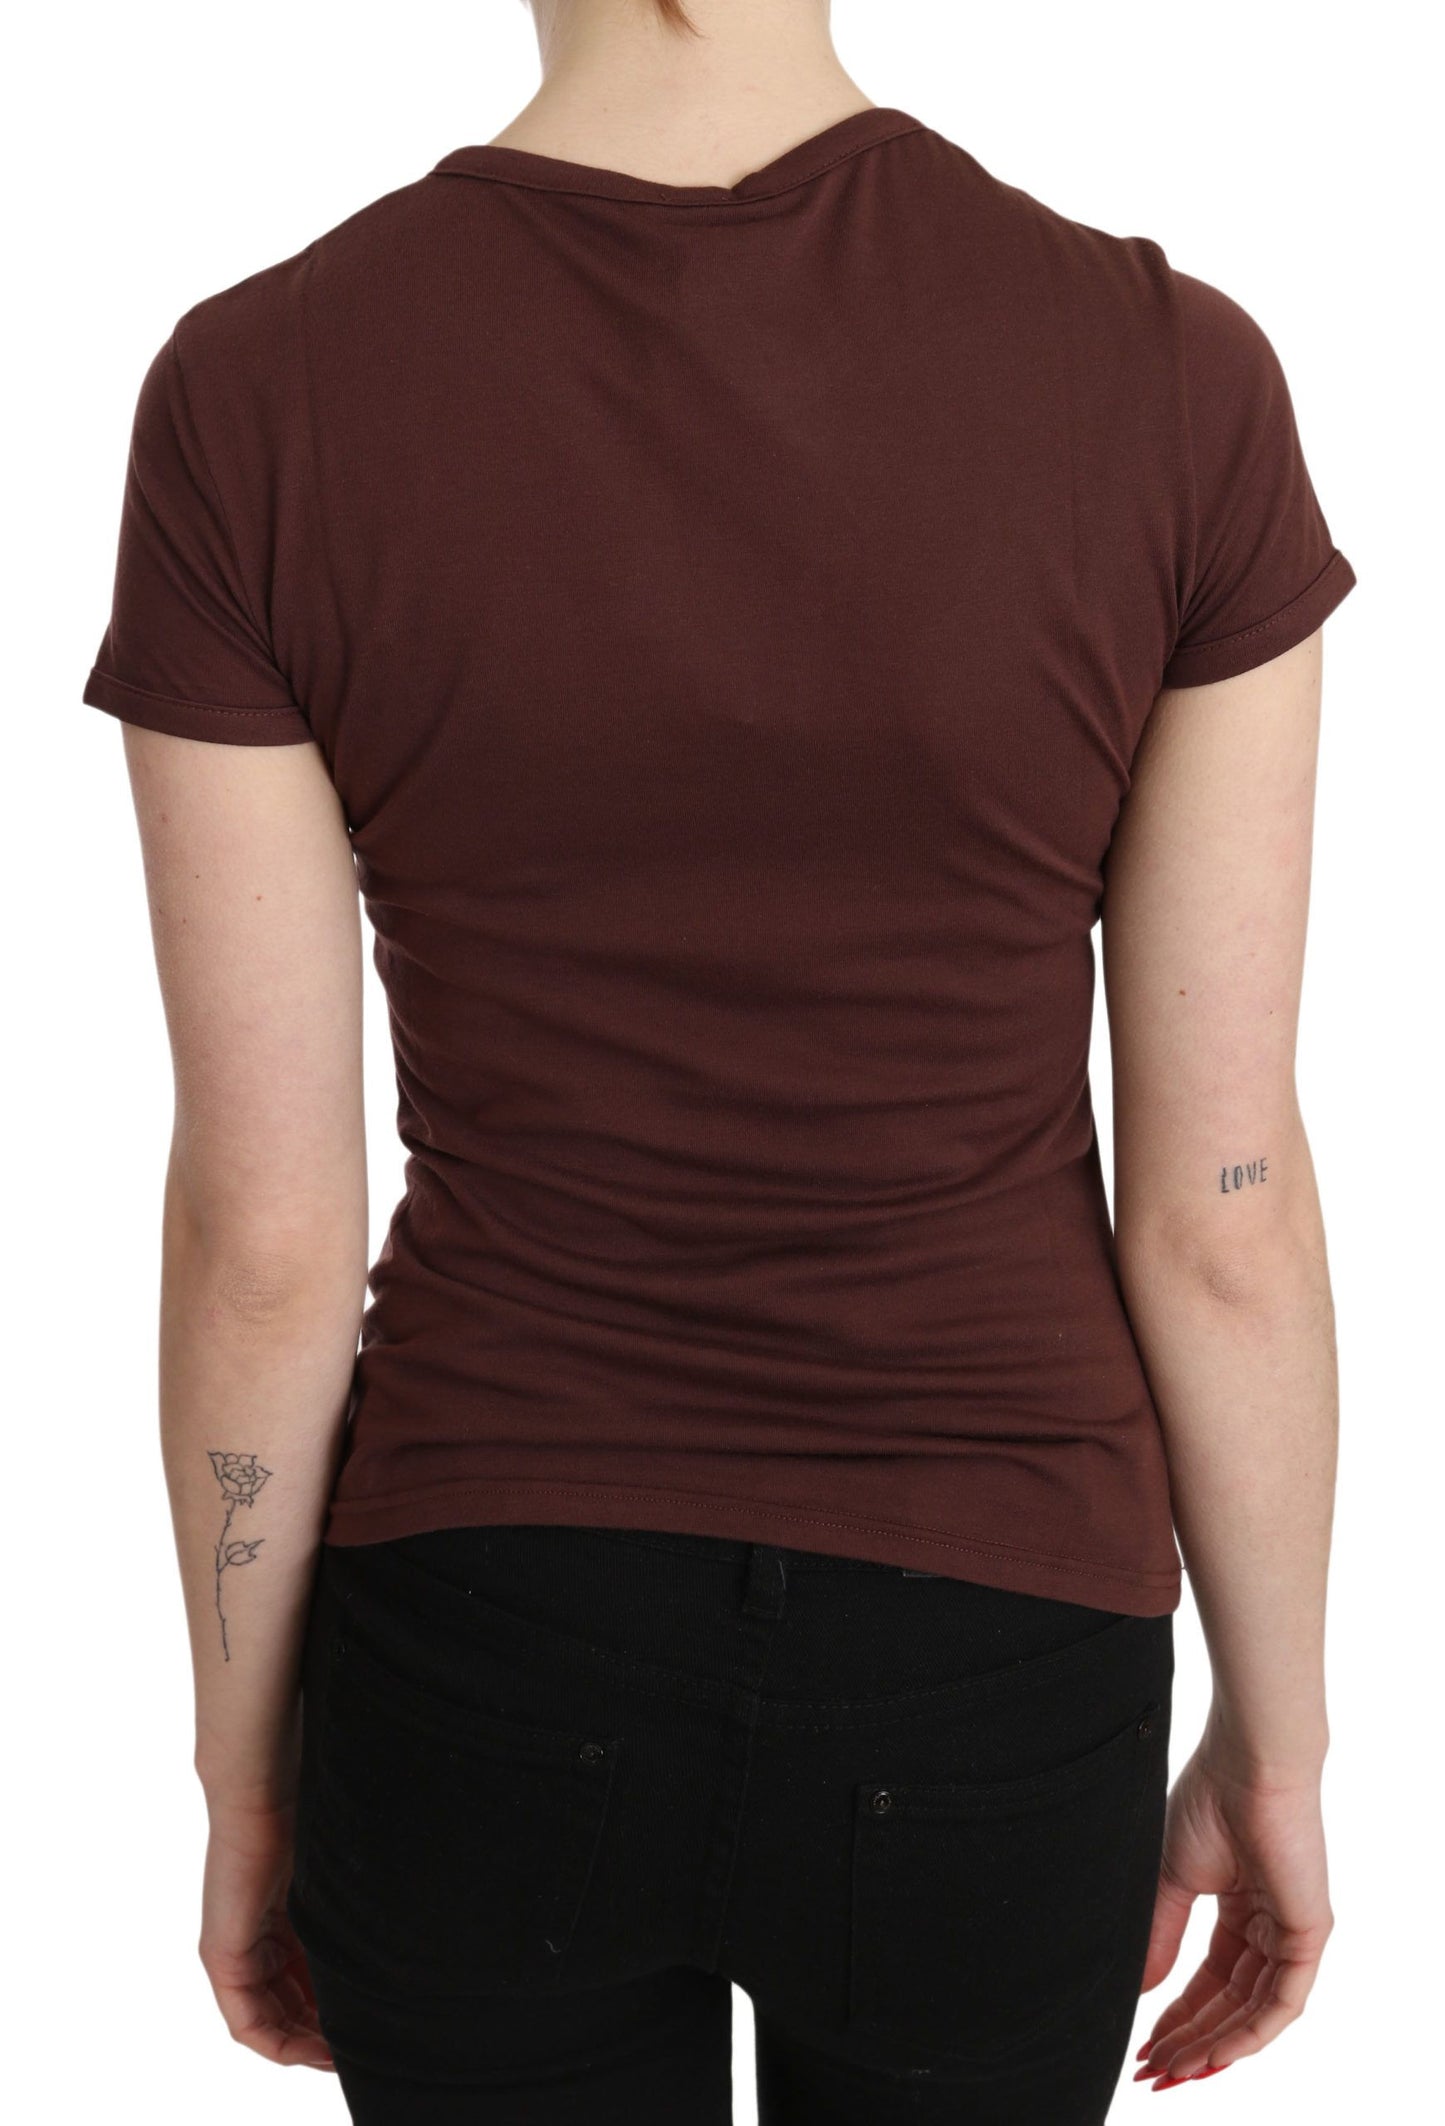 Exte braune Herzen gedruckt rundes Nacken-T-Shirt-Top